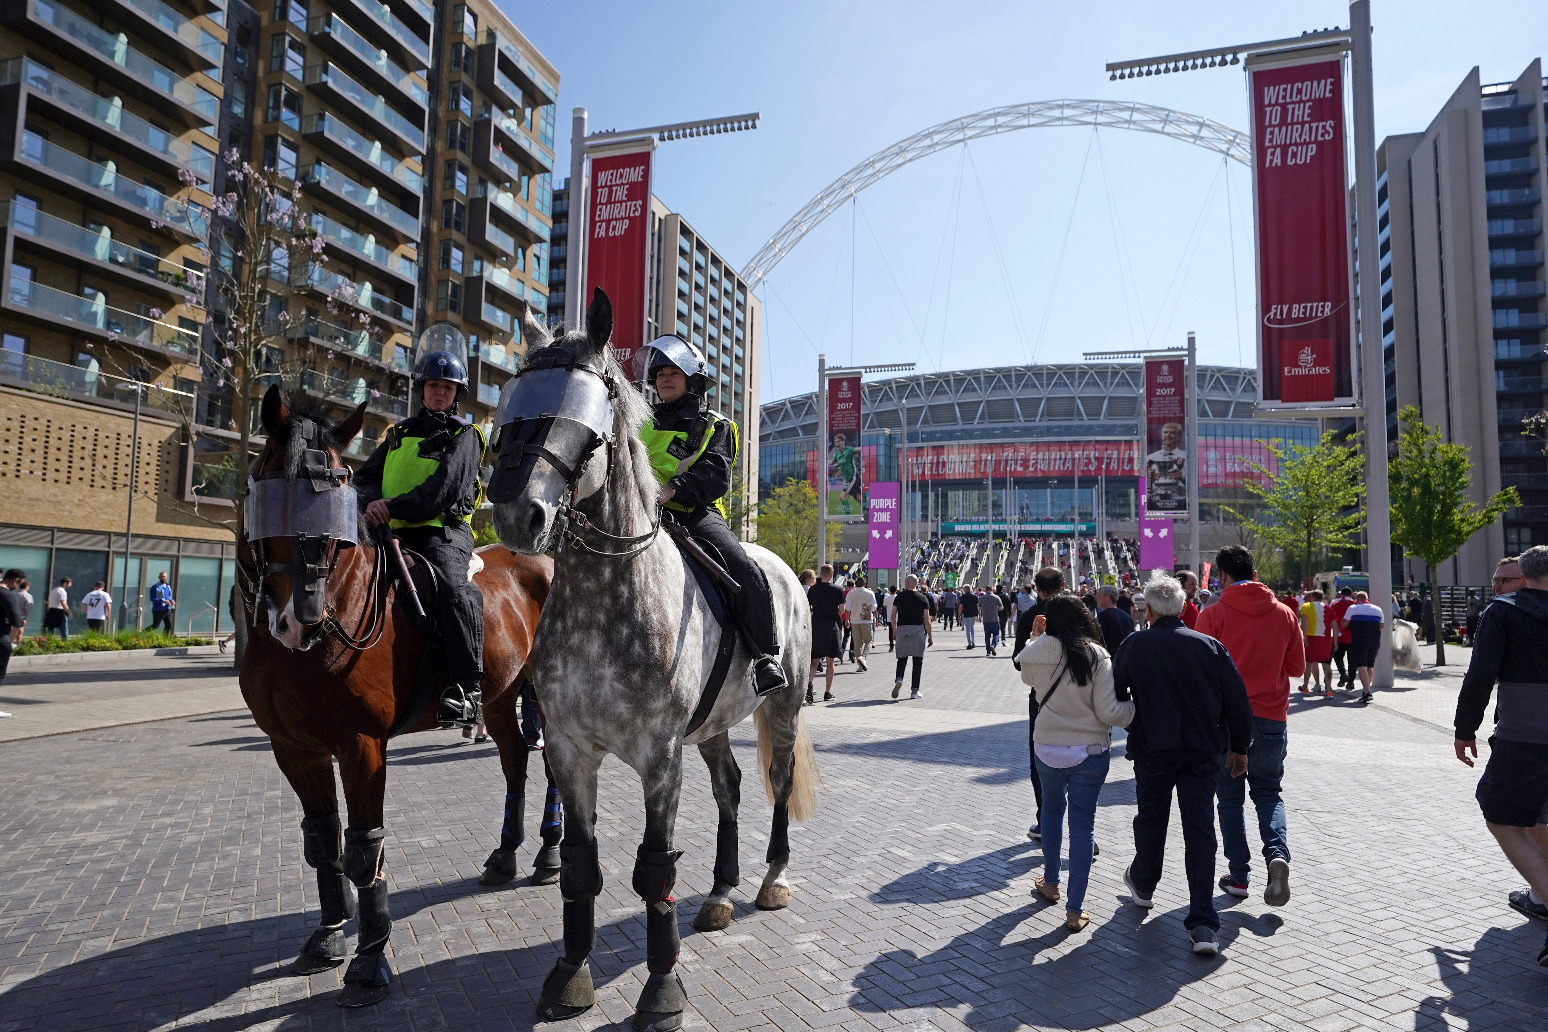 Fans at Wembley urged to be vigilant amid Brussels attacks 